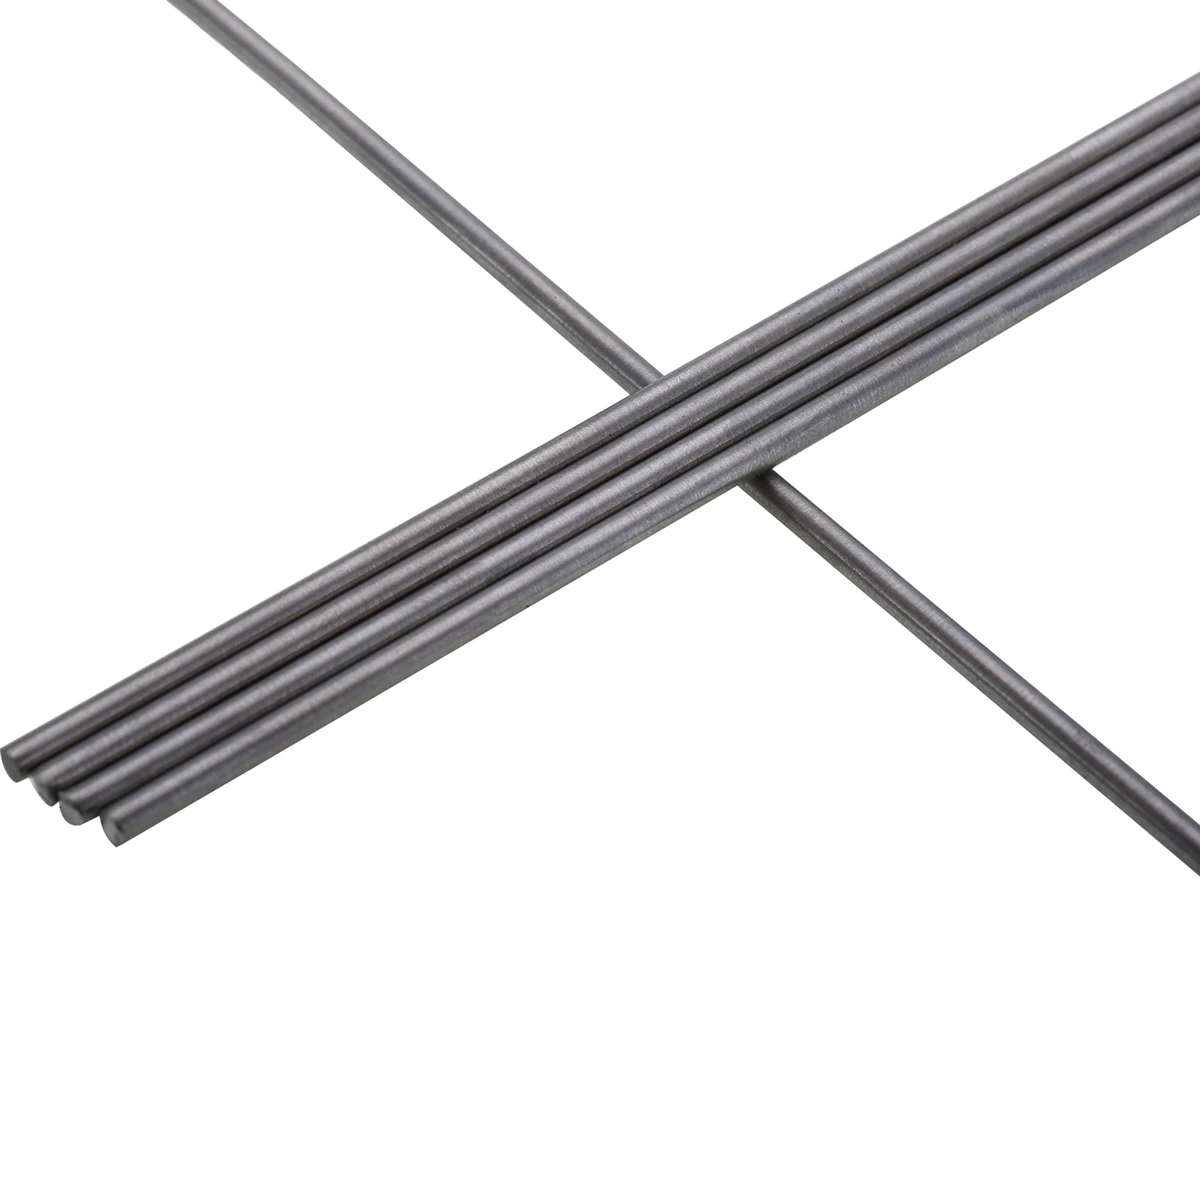 5pcs/set High Quality Titanium Ti Grade 5 GR5 Metal Rods Stick Bar Shaft 3mm*25cm For Industry Tool